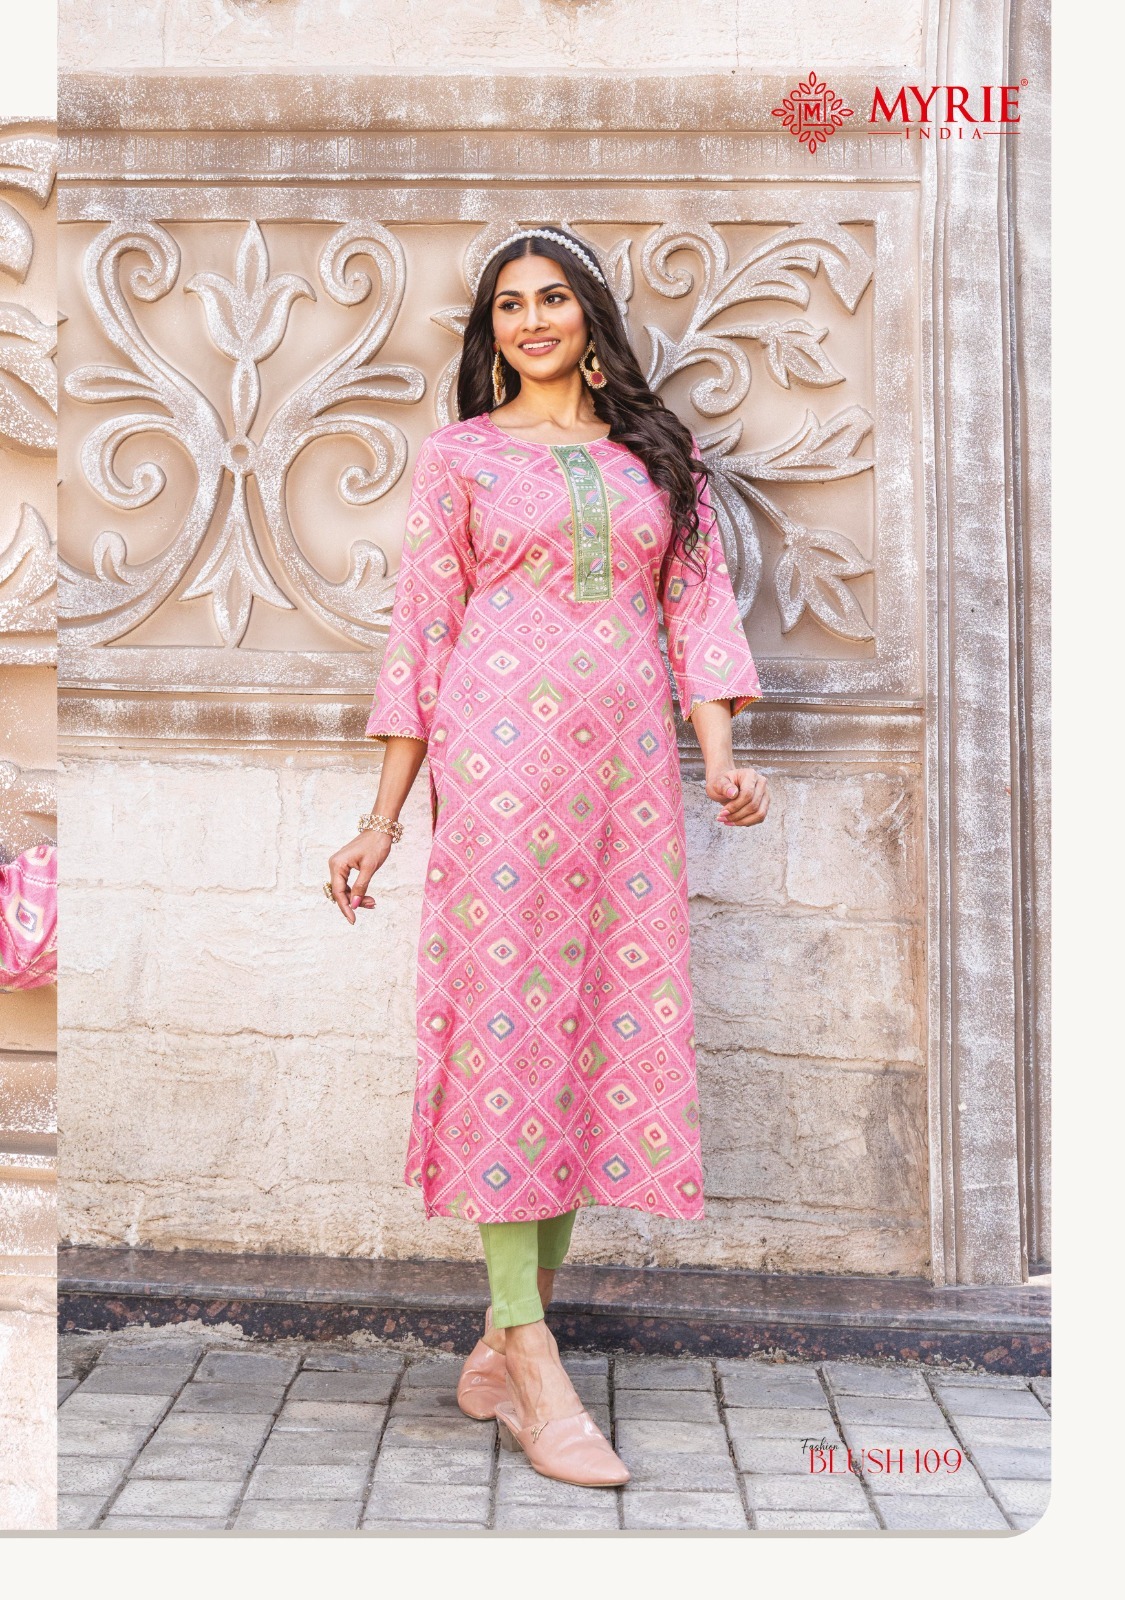 Mayree India Fashion Blush 109